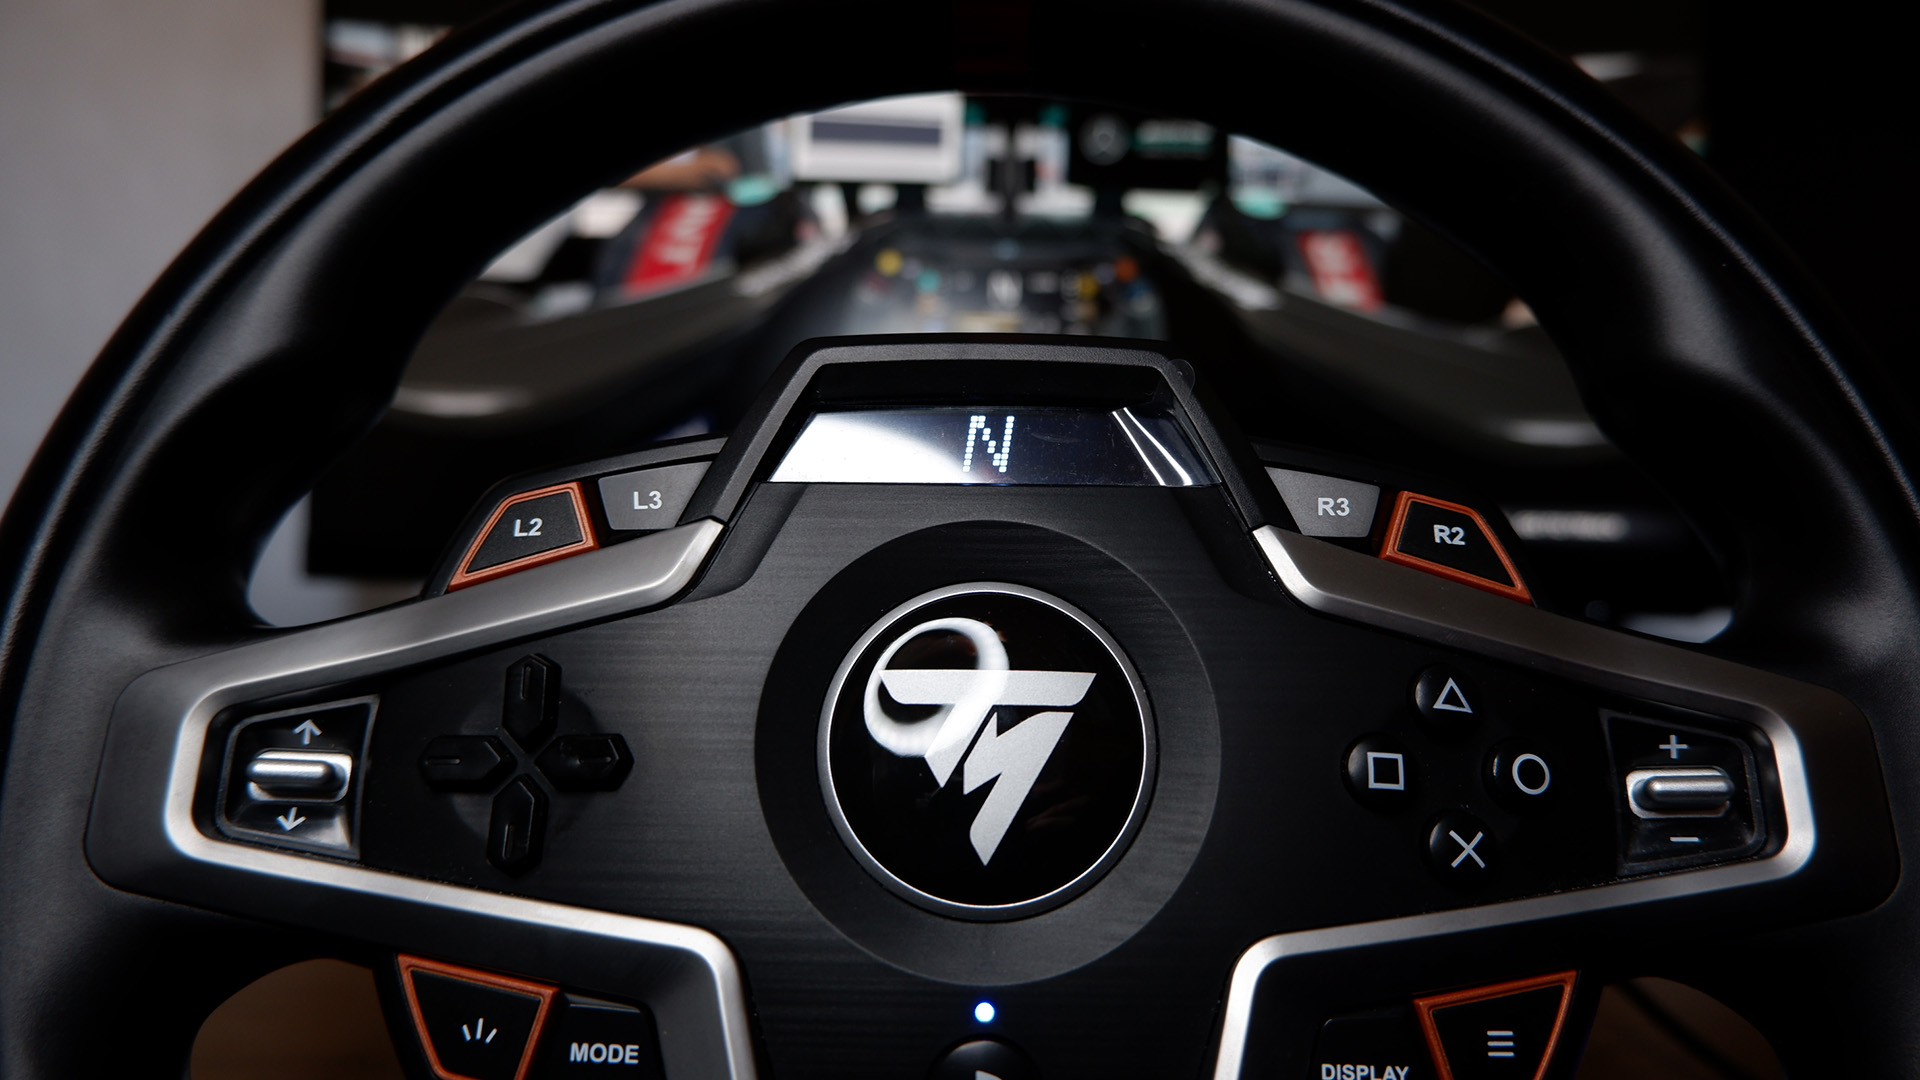 Thrustmaster T248 racing wheel playing F1 2021